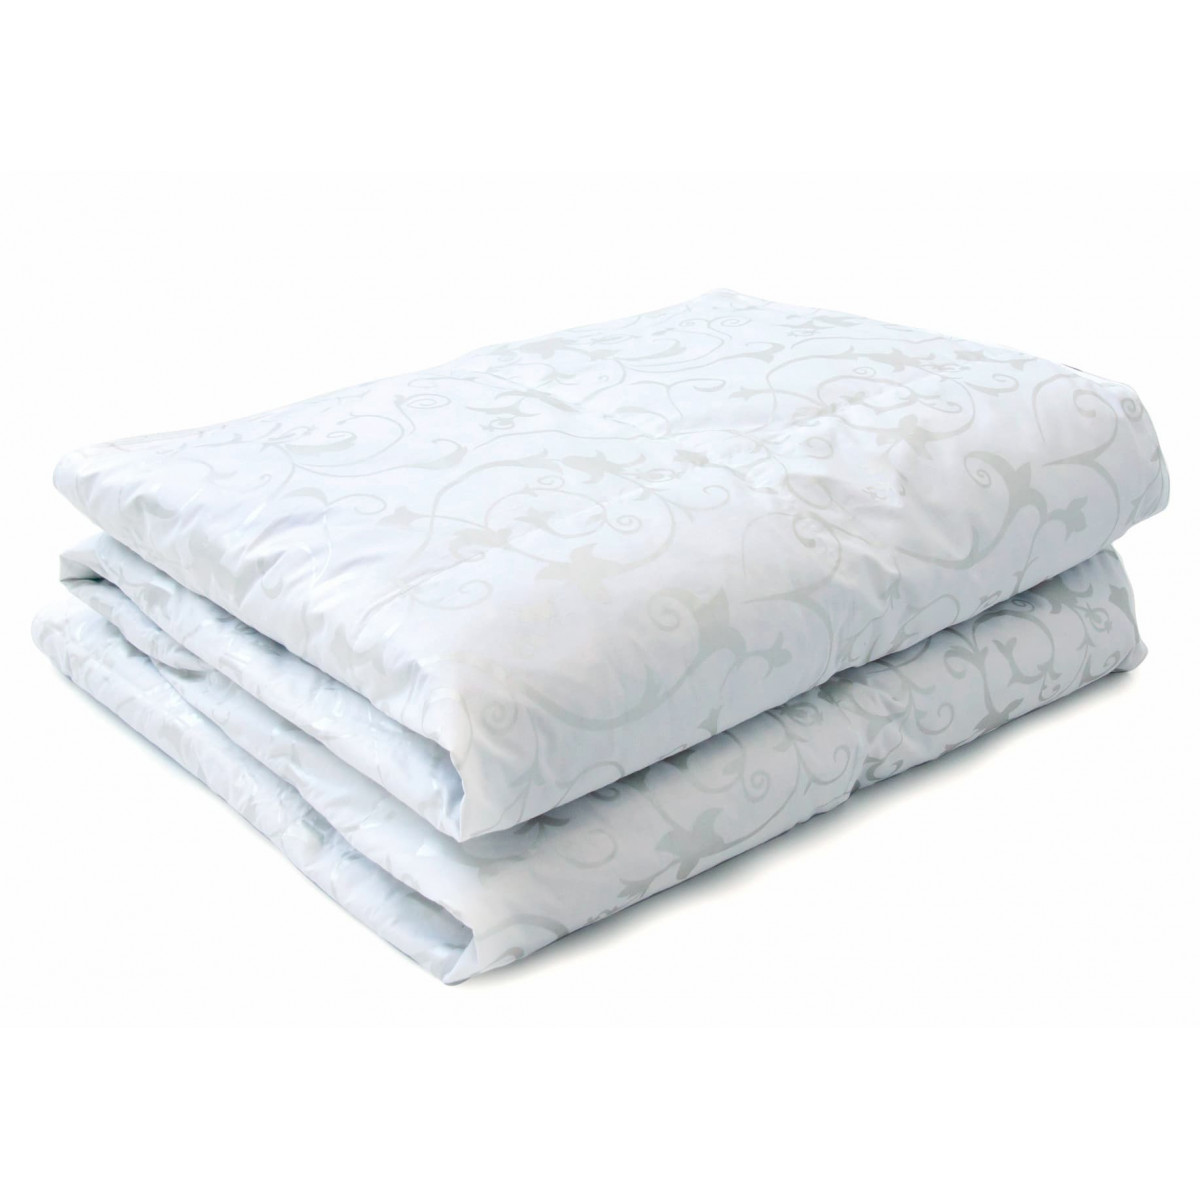 Одеяло Формула теплое (172х205 см), размер 172х205 см bp765726 Одеяло Формула теплое (172х205 см) - фото 1